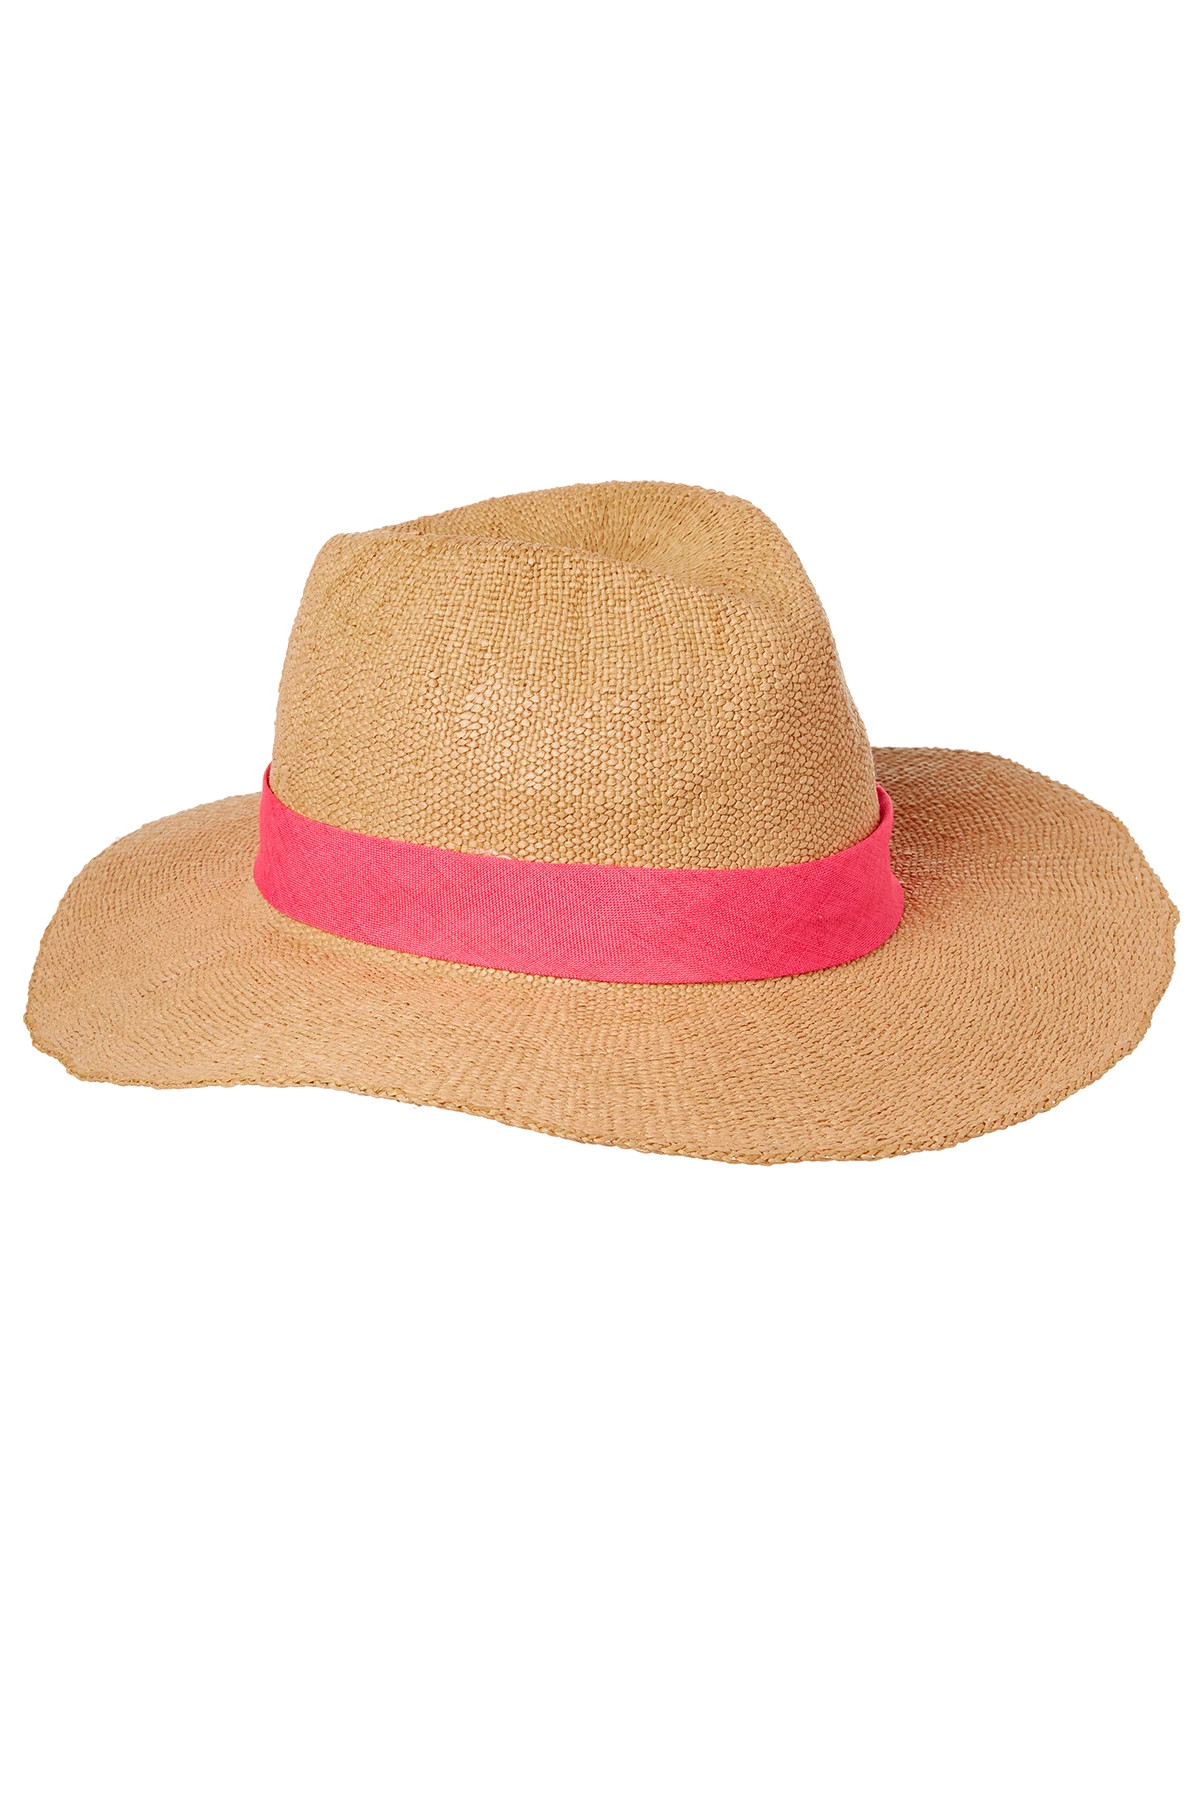 TAN/PINK Neon Ribbon Panama Hat image number 1